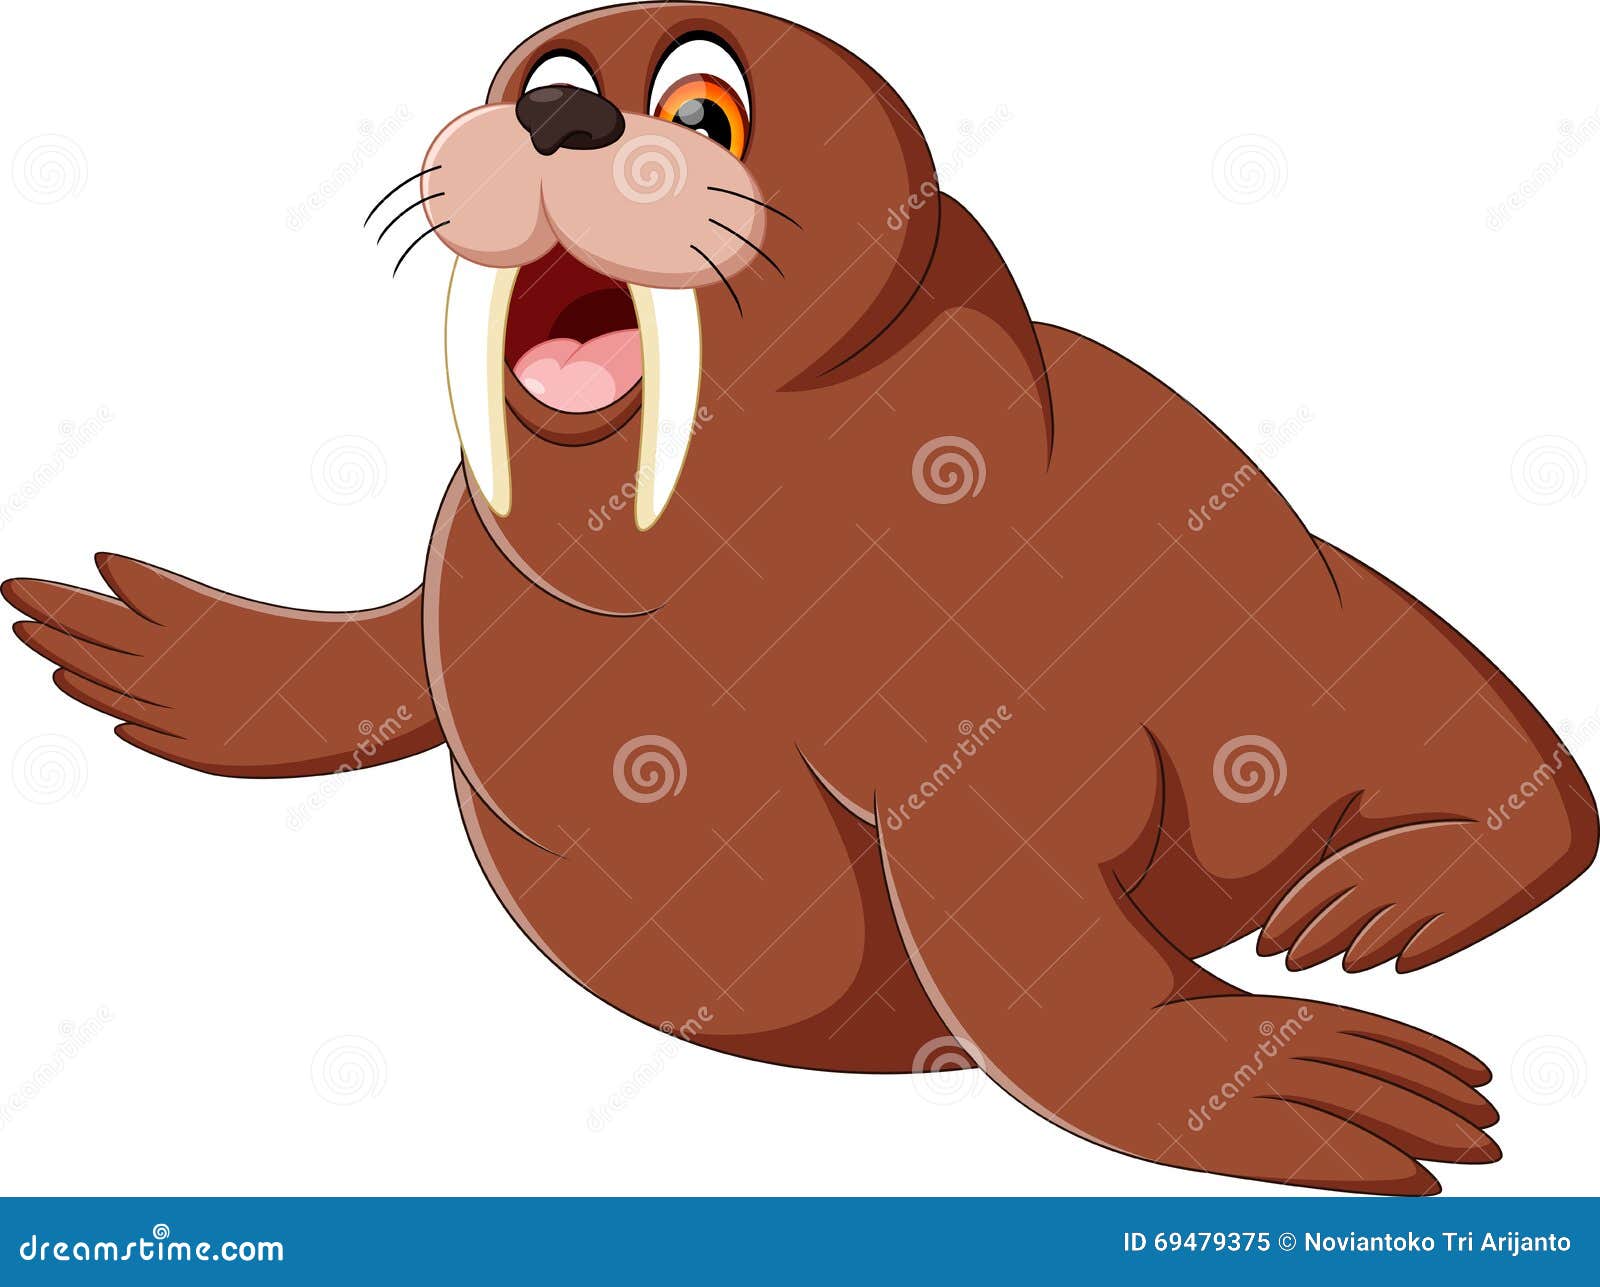 Cartoon walrus stock vector. Illustration of cuddly, mascot - 69479375